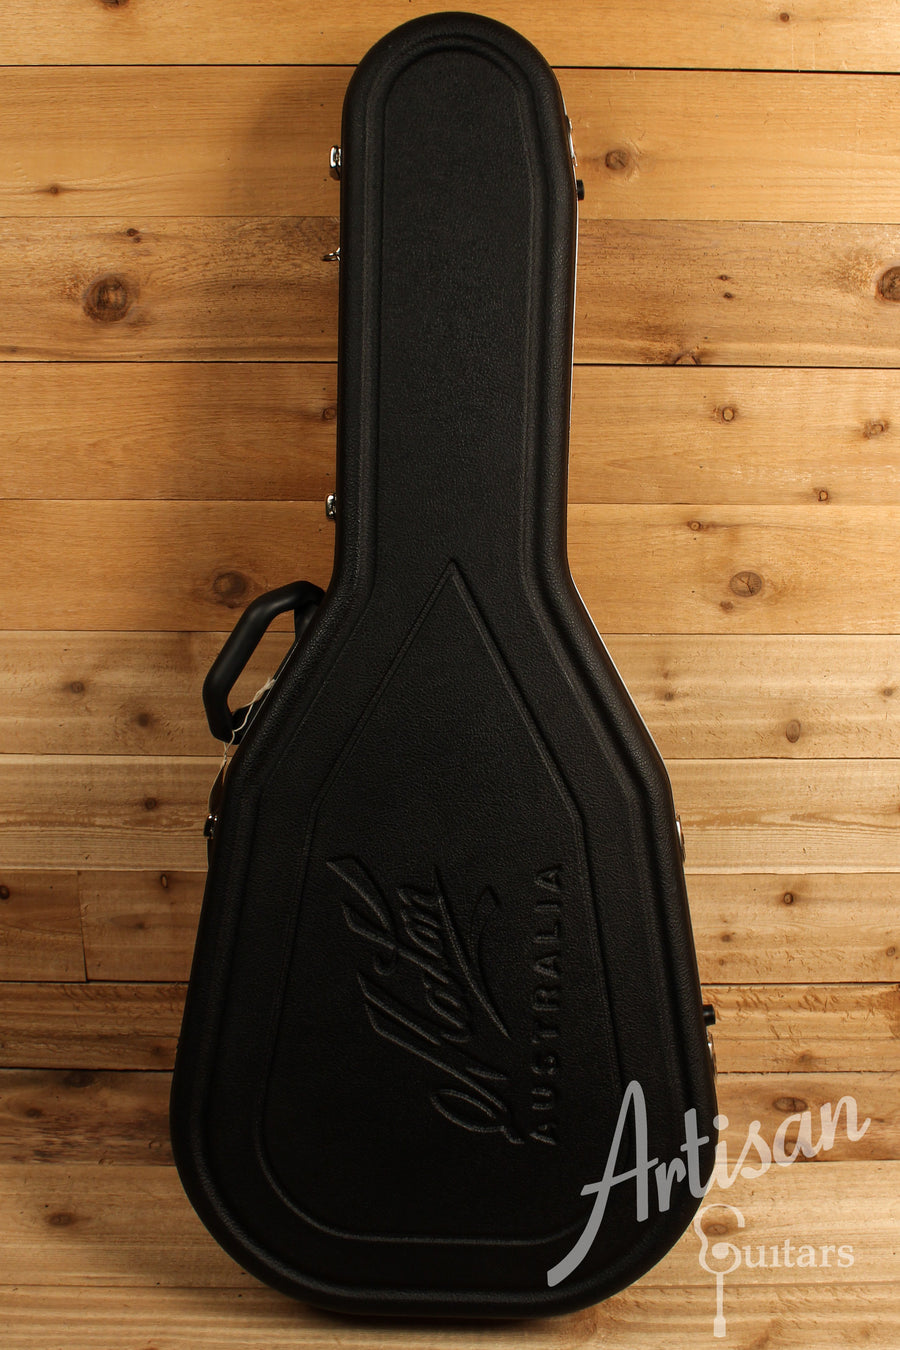 Maton EA 80C Australian Series with Sitka and Blackwood Pre-Owned 2014 ID-12908 - Artisan Guitars